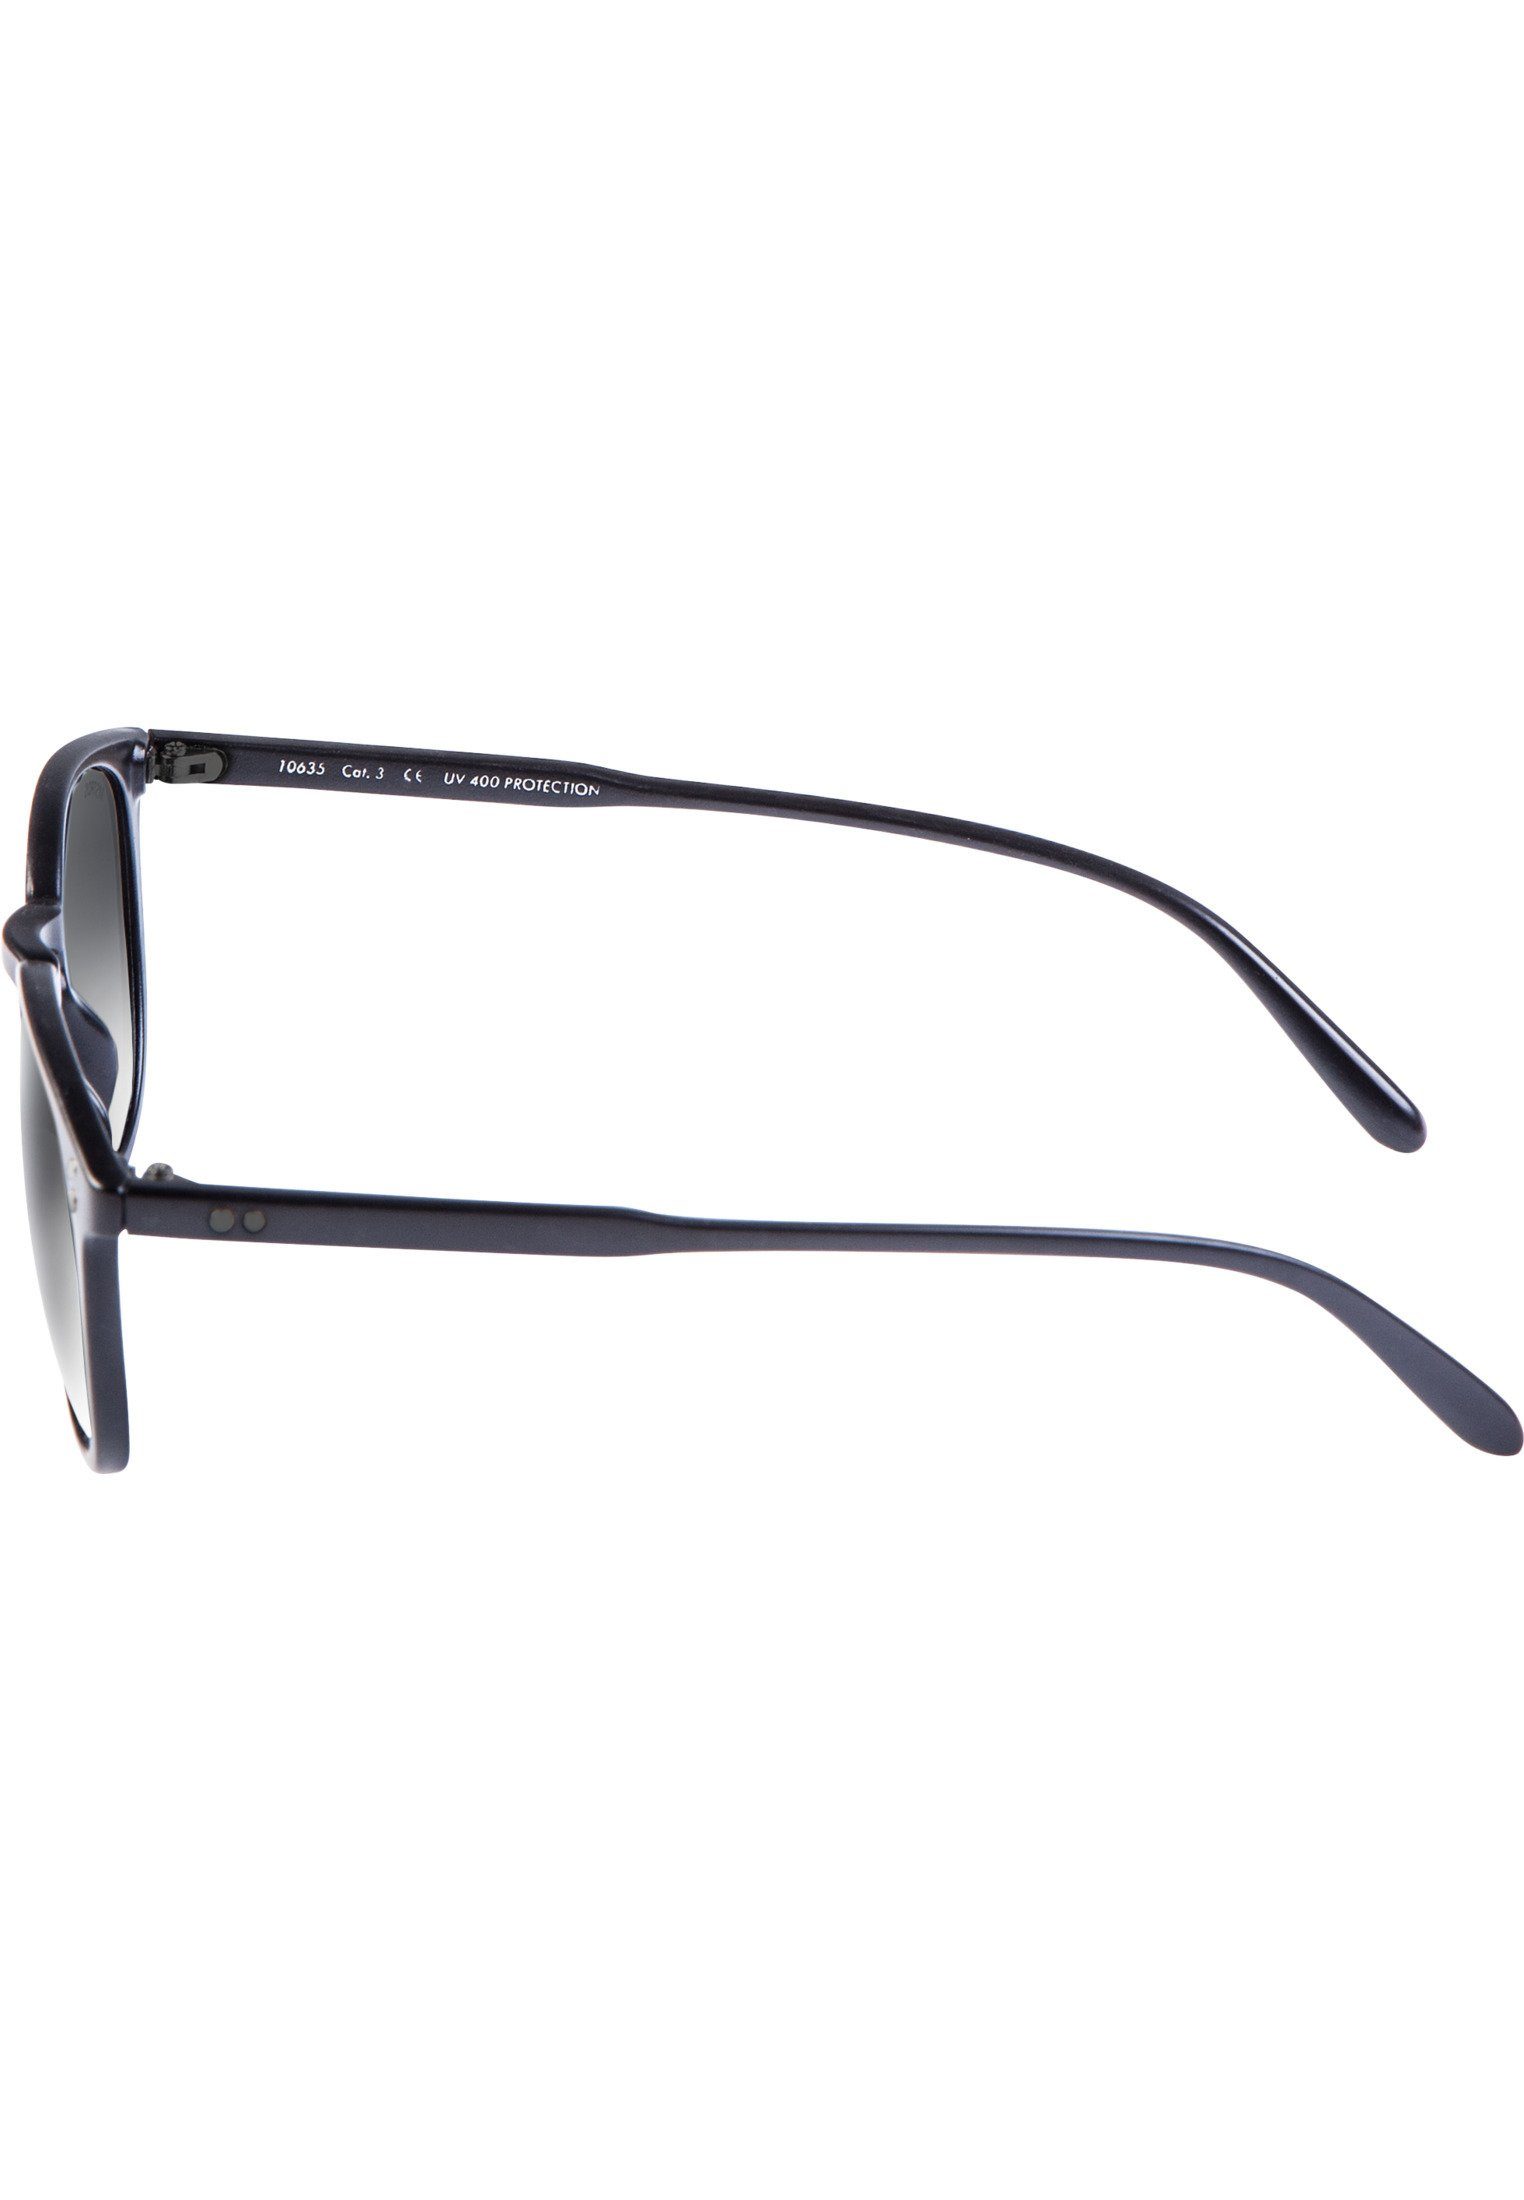 Accessoires MSTRDS blk/gry Sunglasses Arthur Sonnenbrille Youth